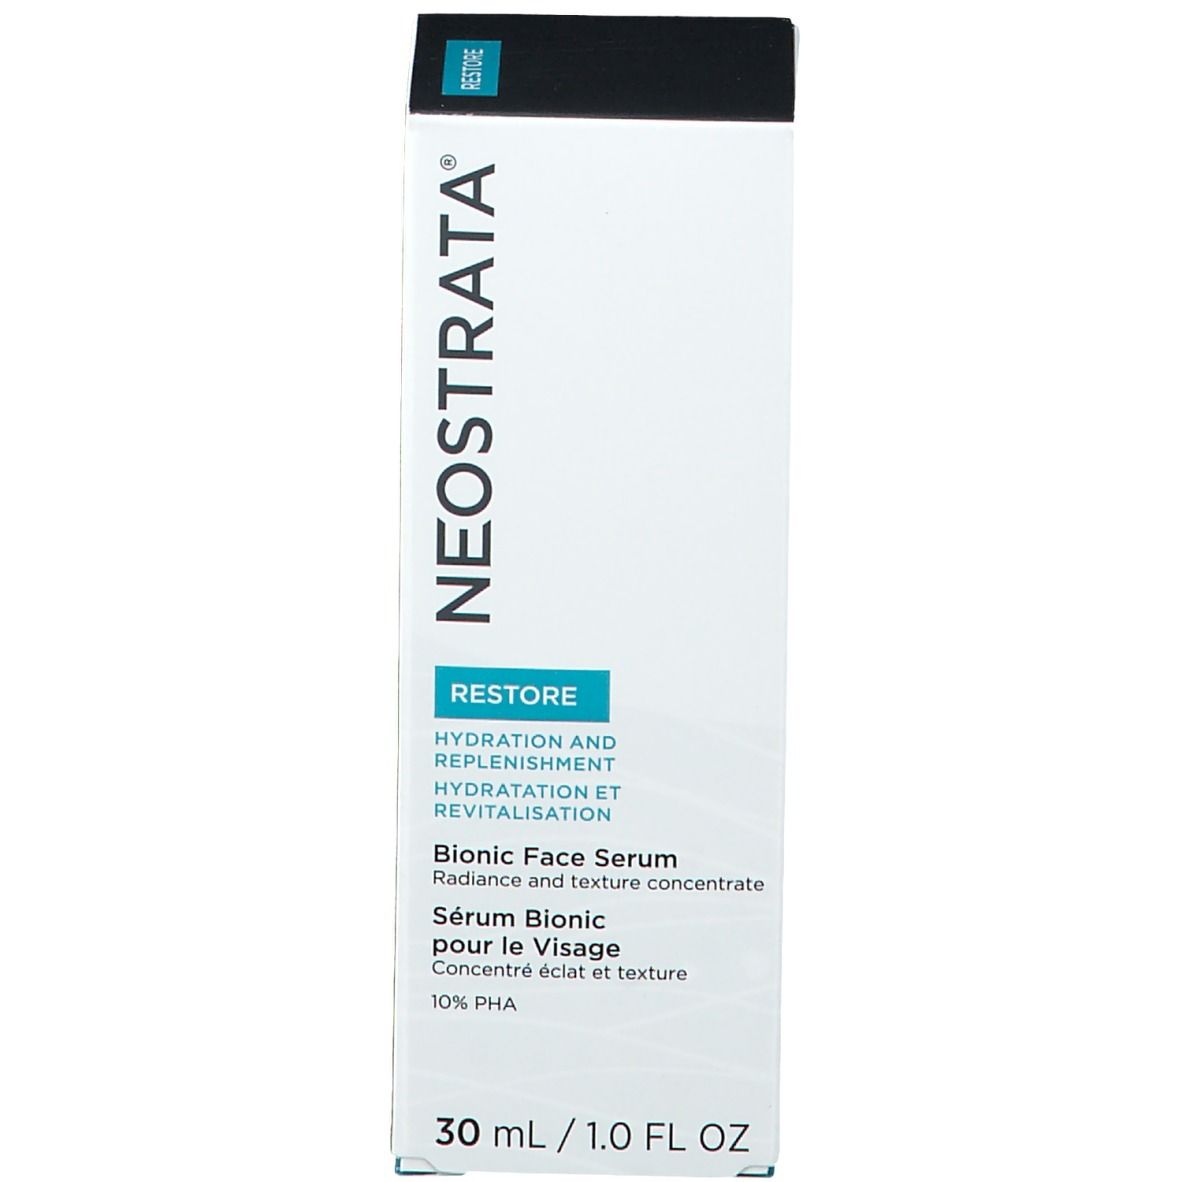 NeoStrata® Restore Bionic Face Serum 10 PHA